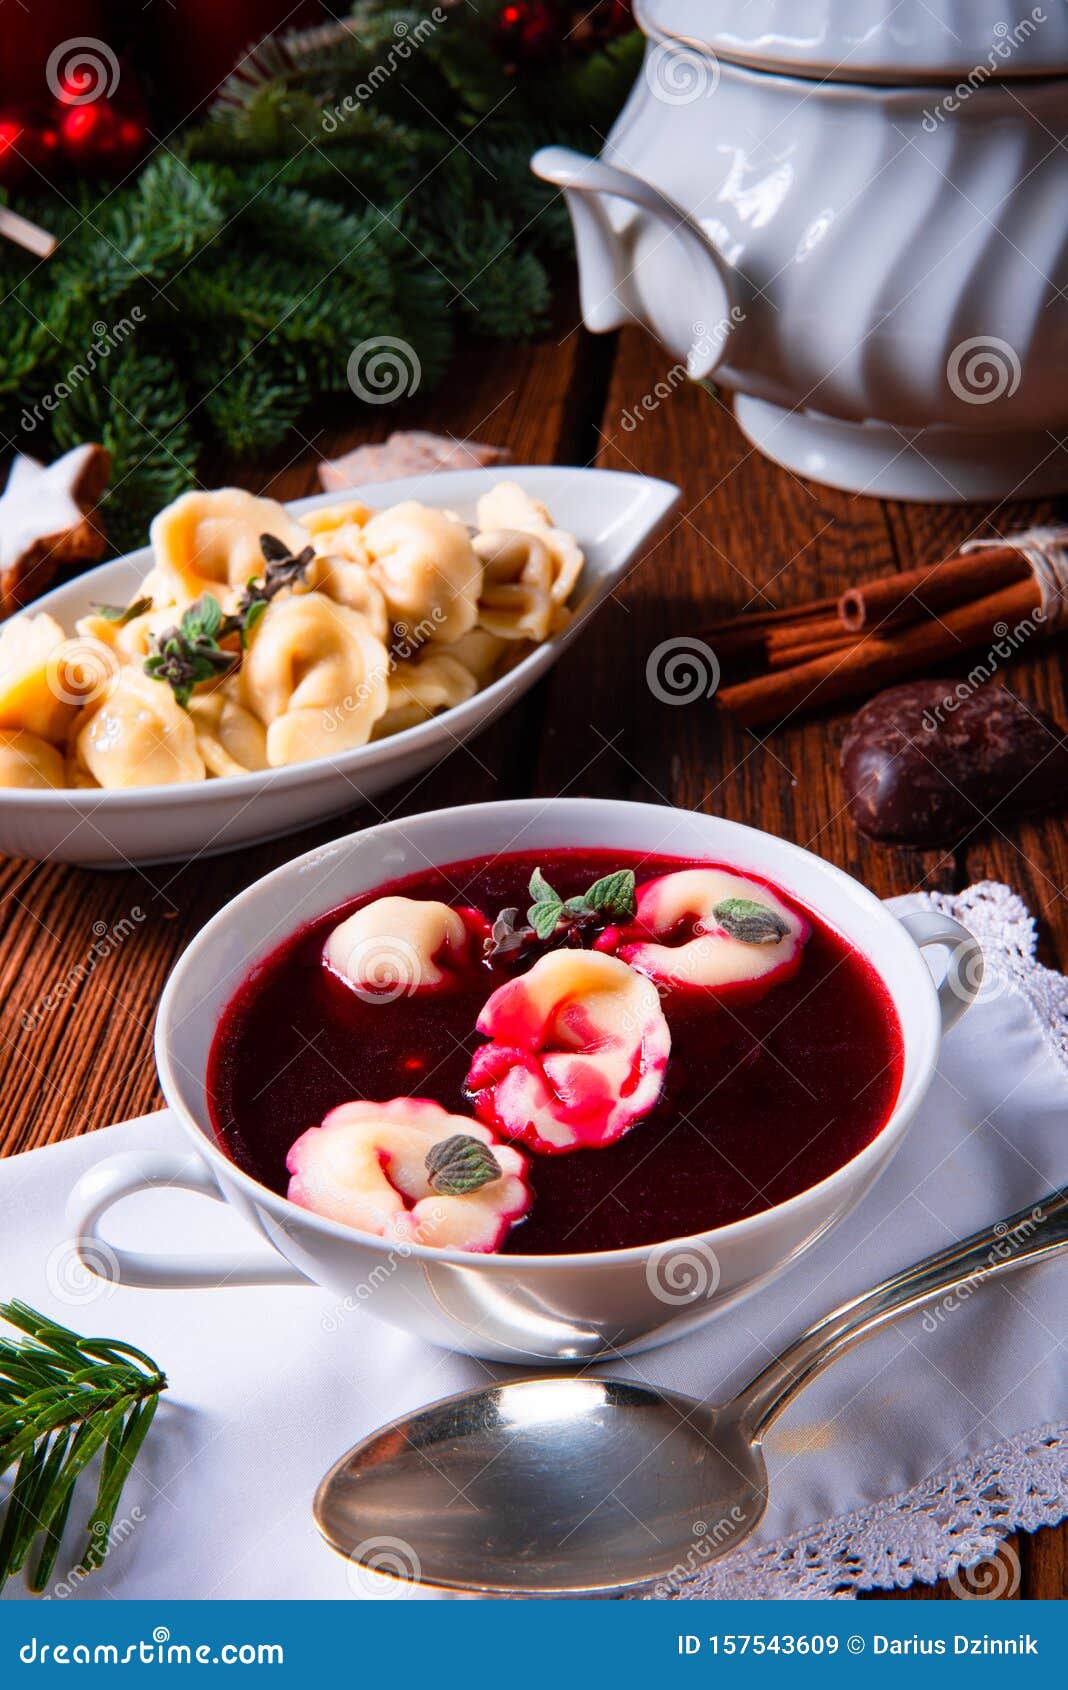 Traditional Polish Christmas Eve Borscht with Dumplings Stock Image ...